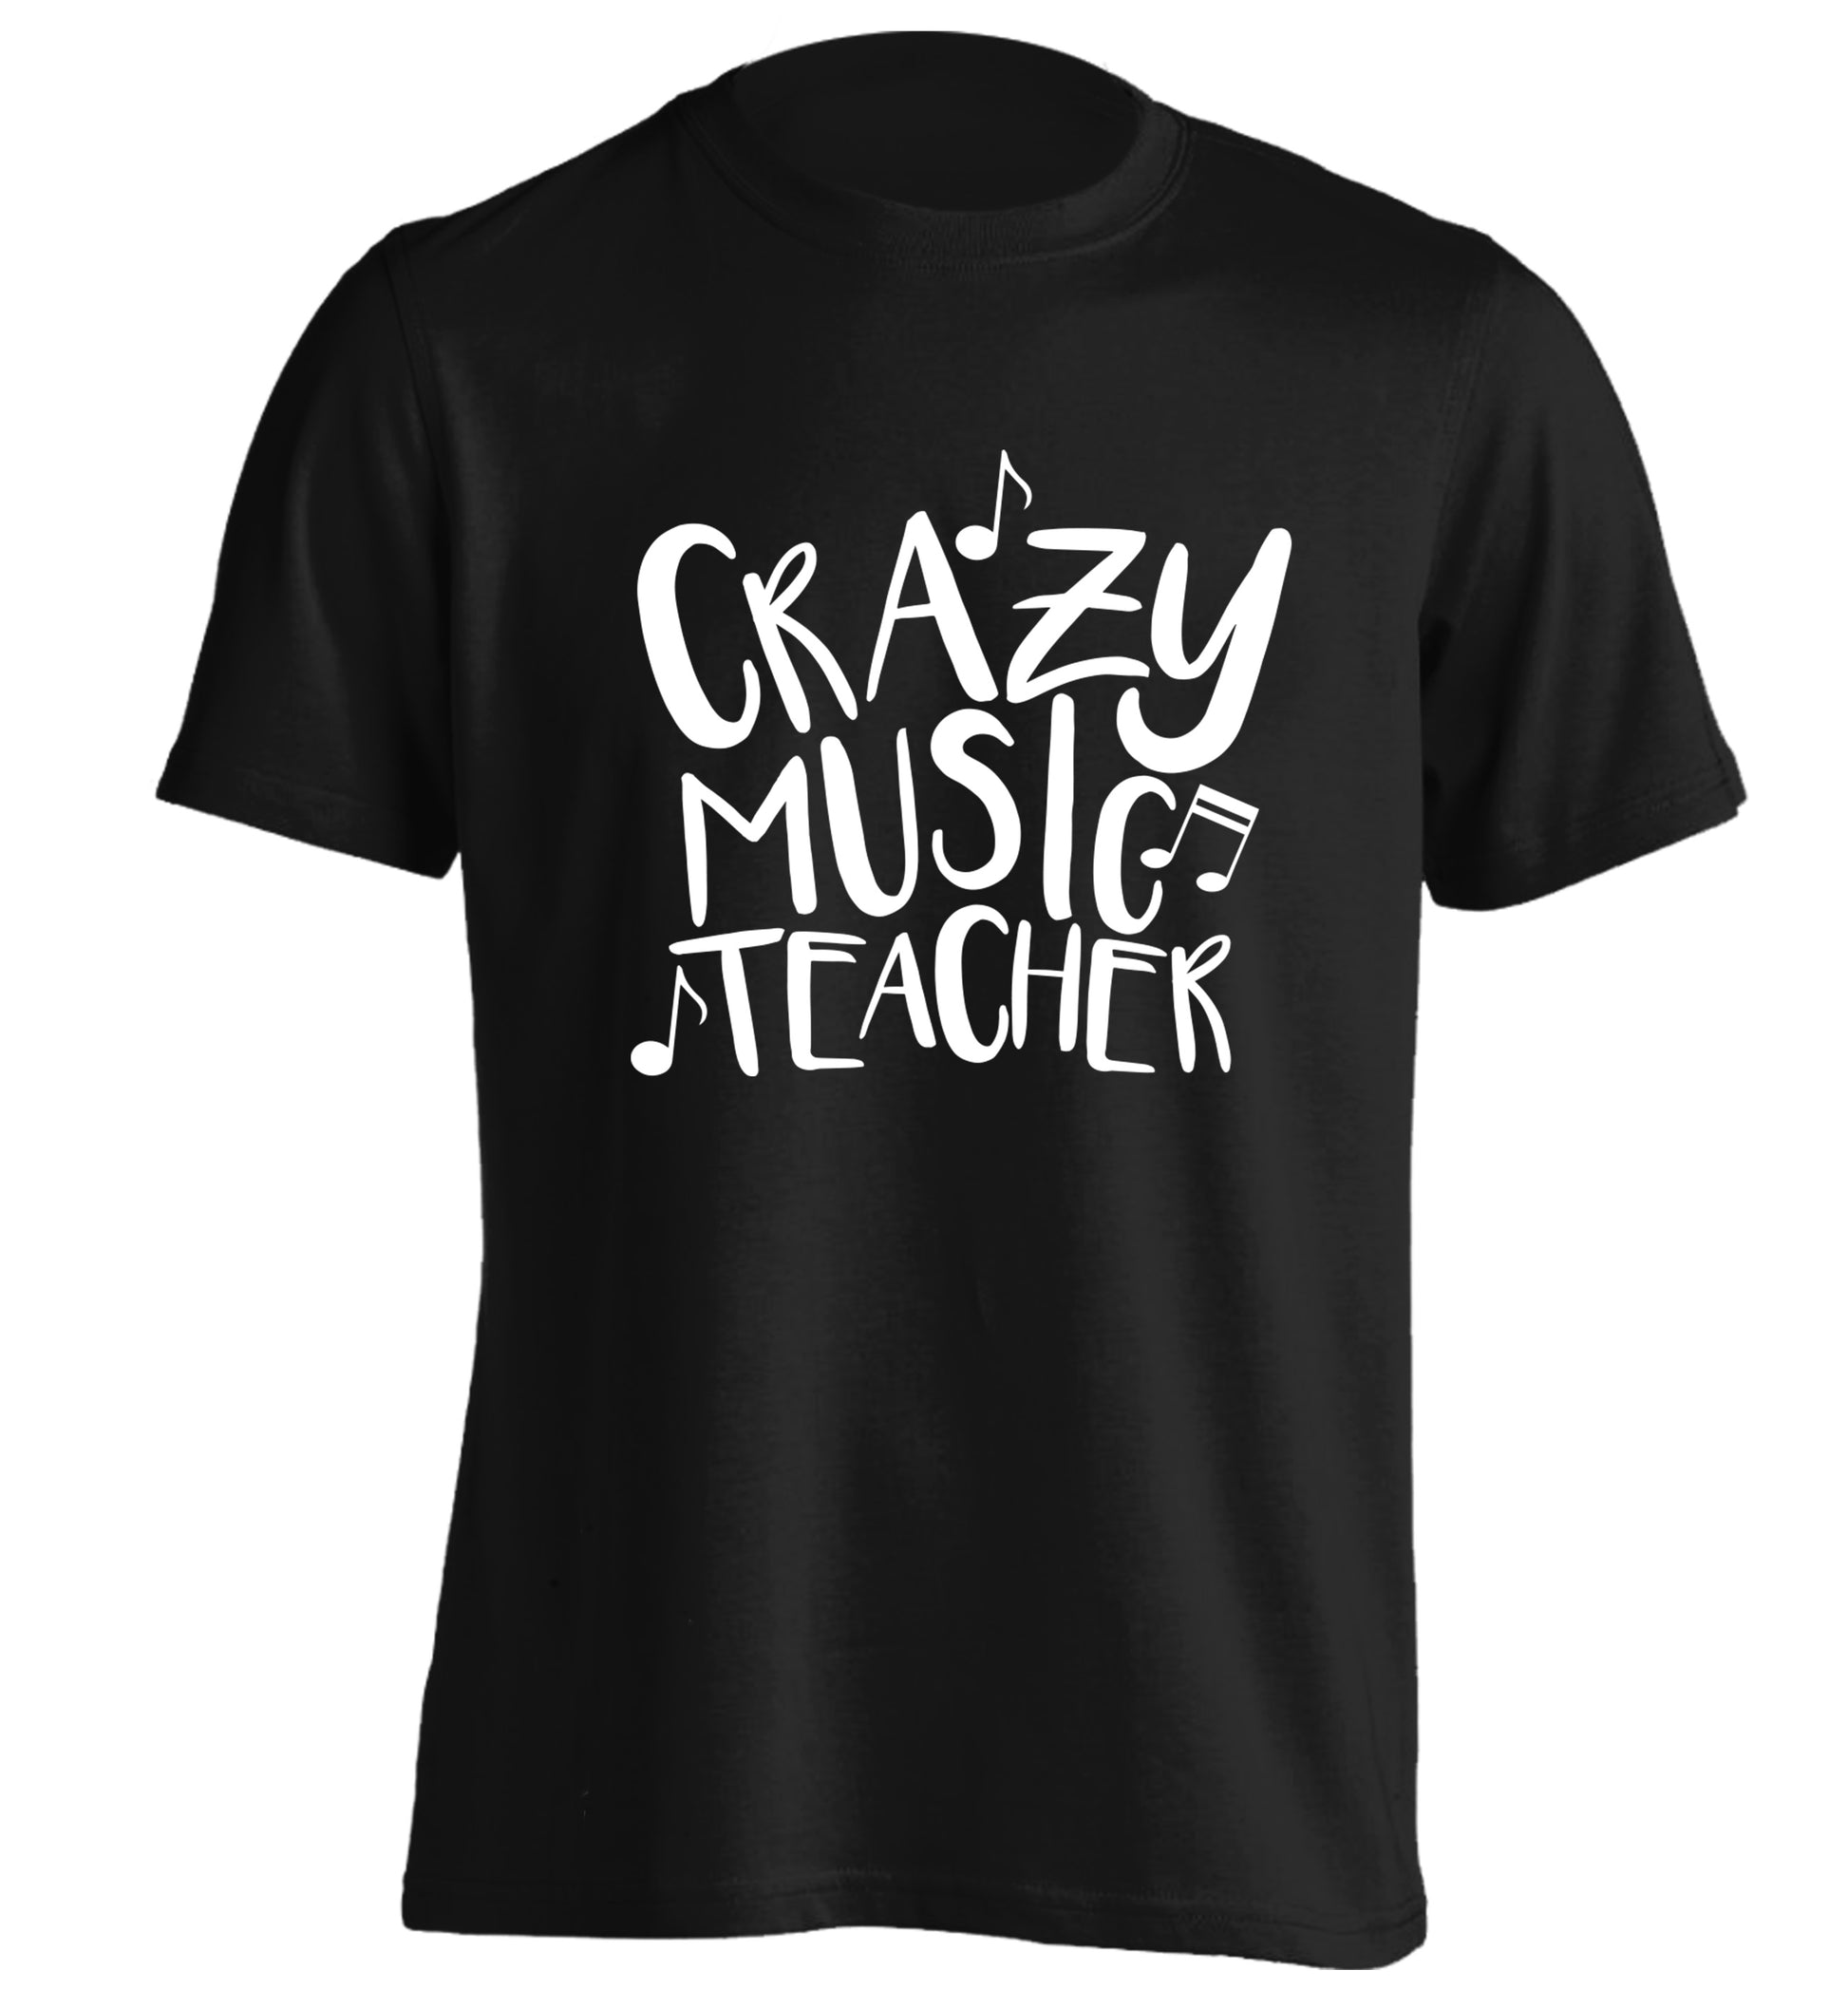 Crazy music teacher adults unisex black Tshirt 2XL